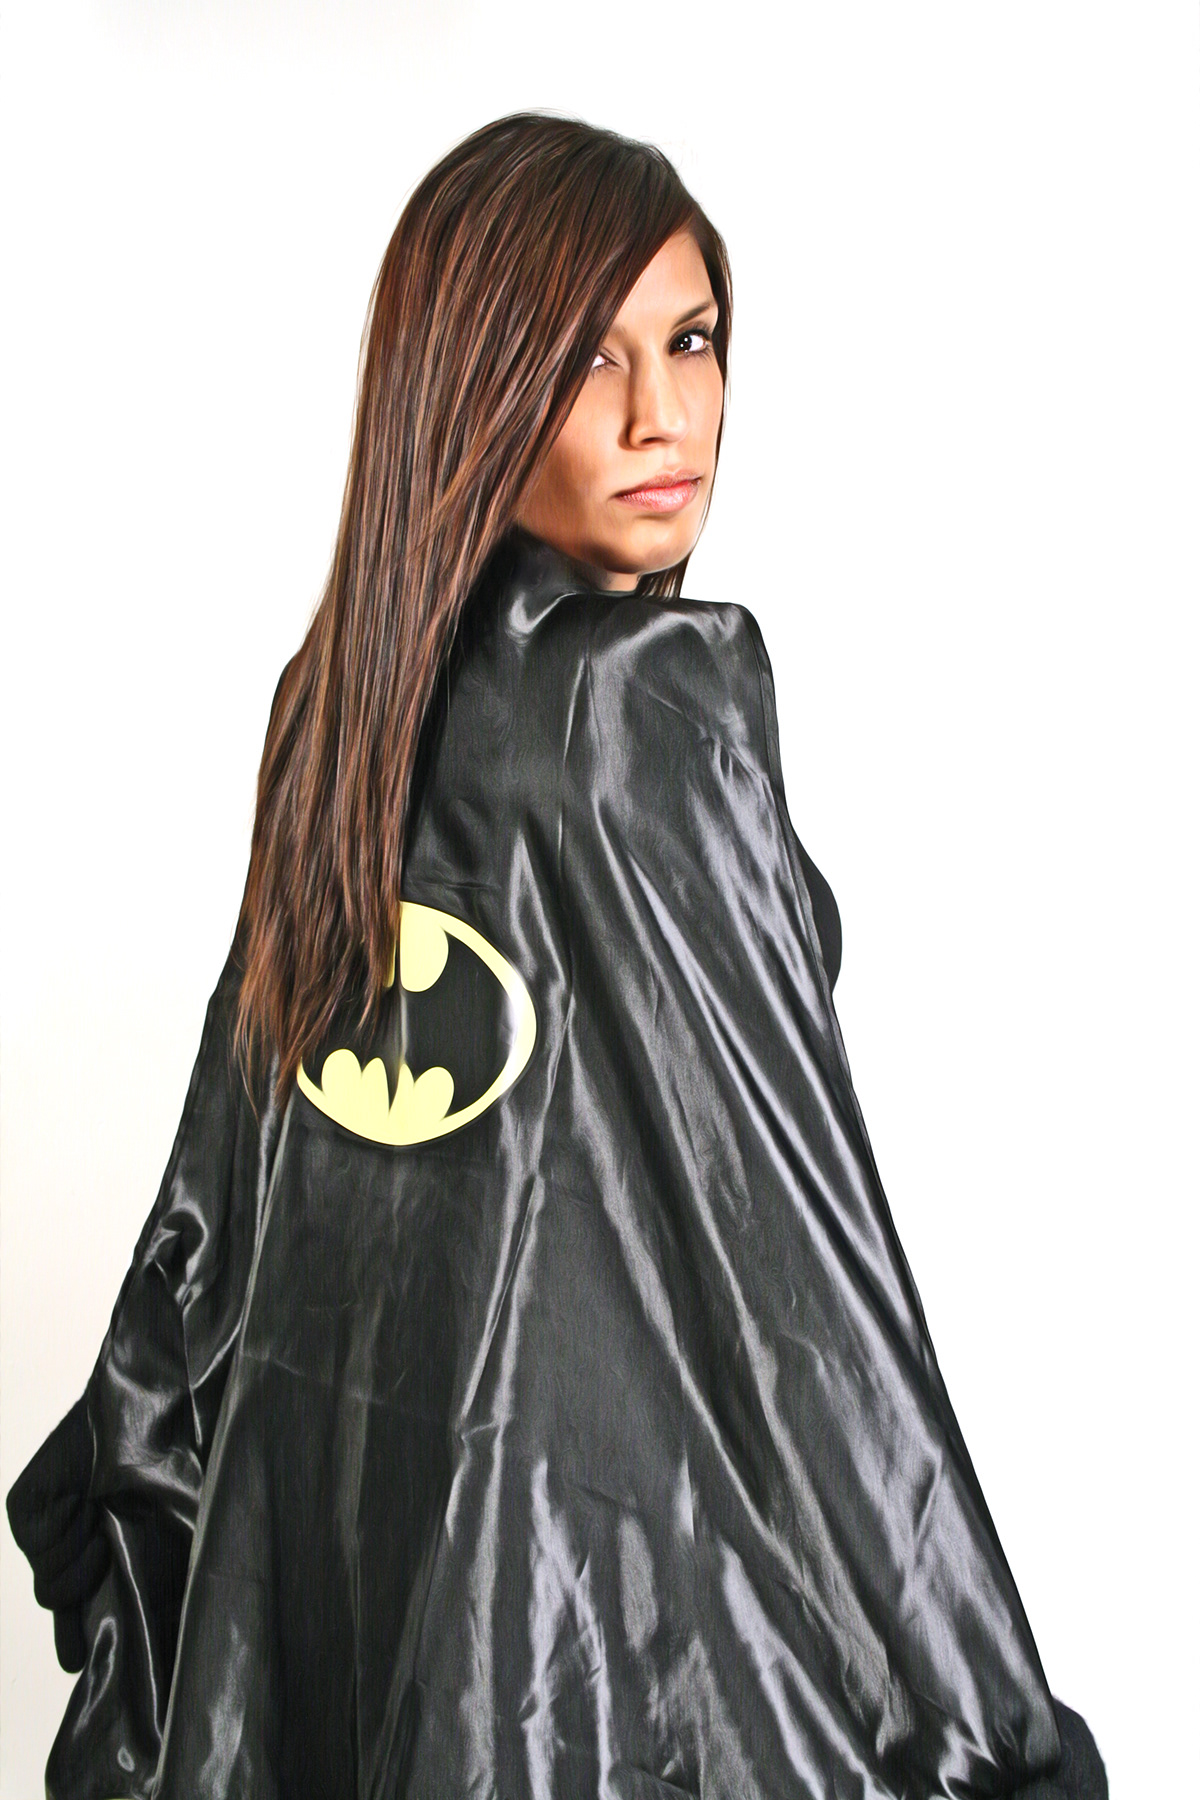 super Hero heroine Batgirl wonderwoman Supergirl JLA models creative photoshop Cosplay losangeles Claremont